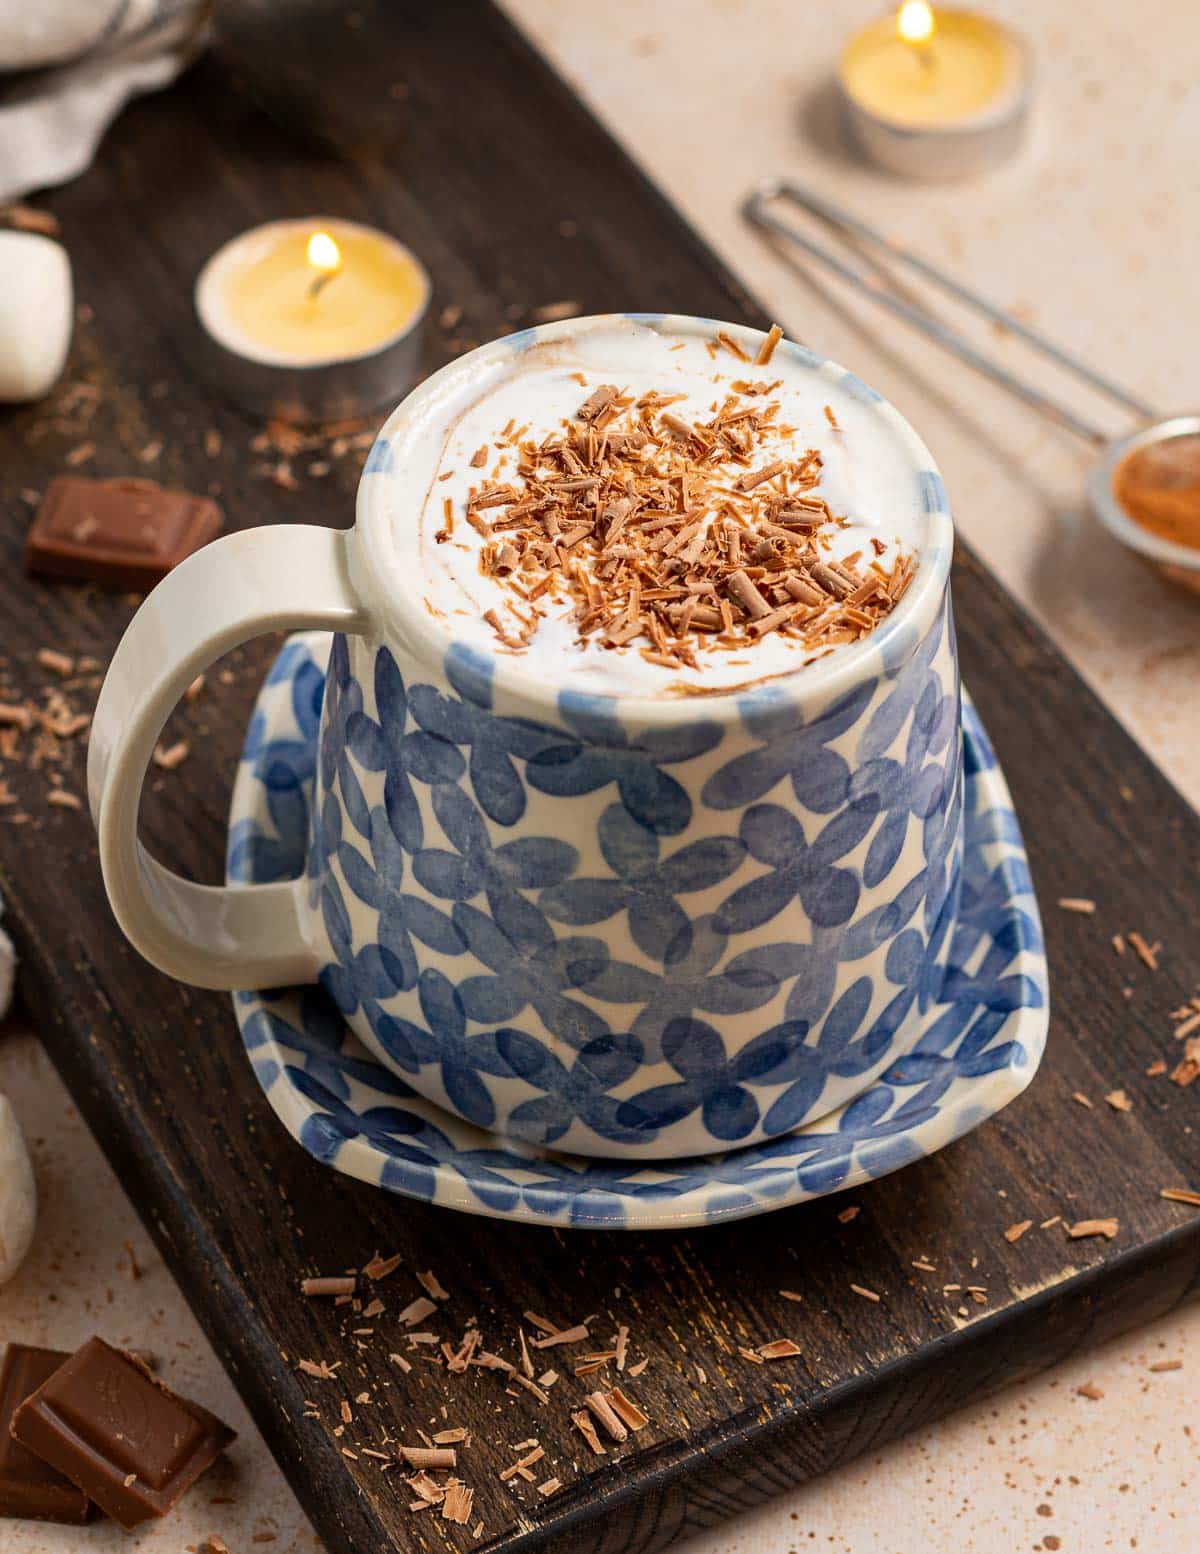 a mug of hot chocolate with cream and chocolate curls